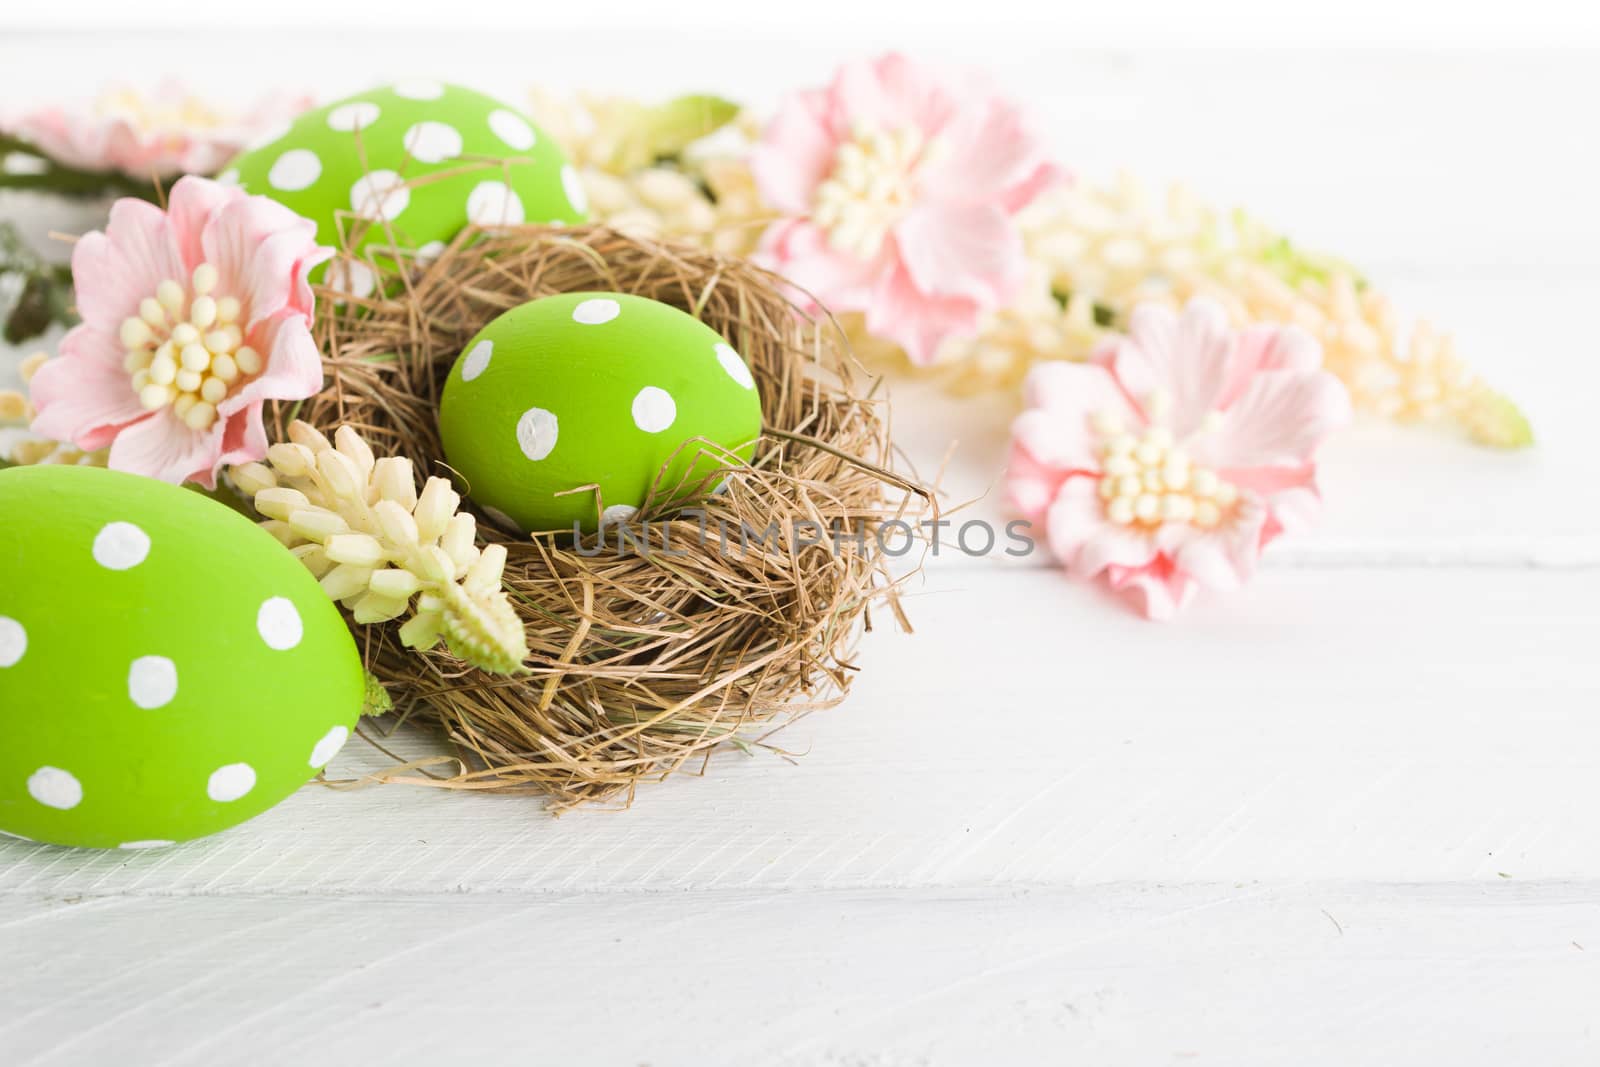 Easter nest by fotomaximum